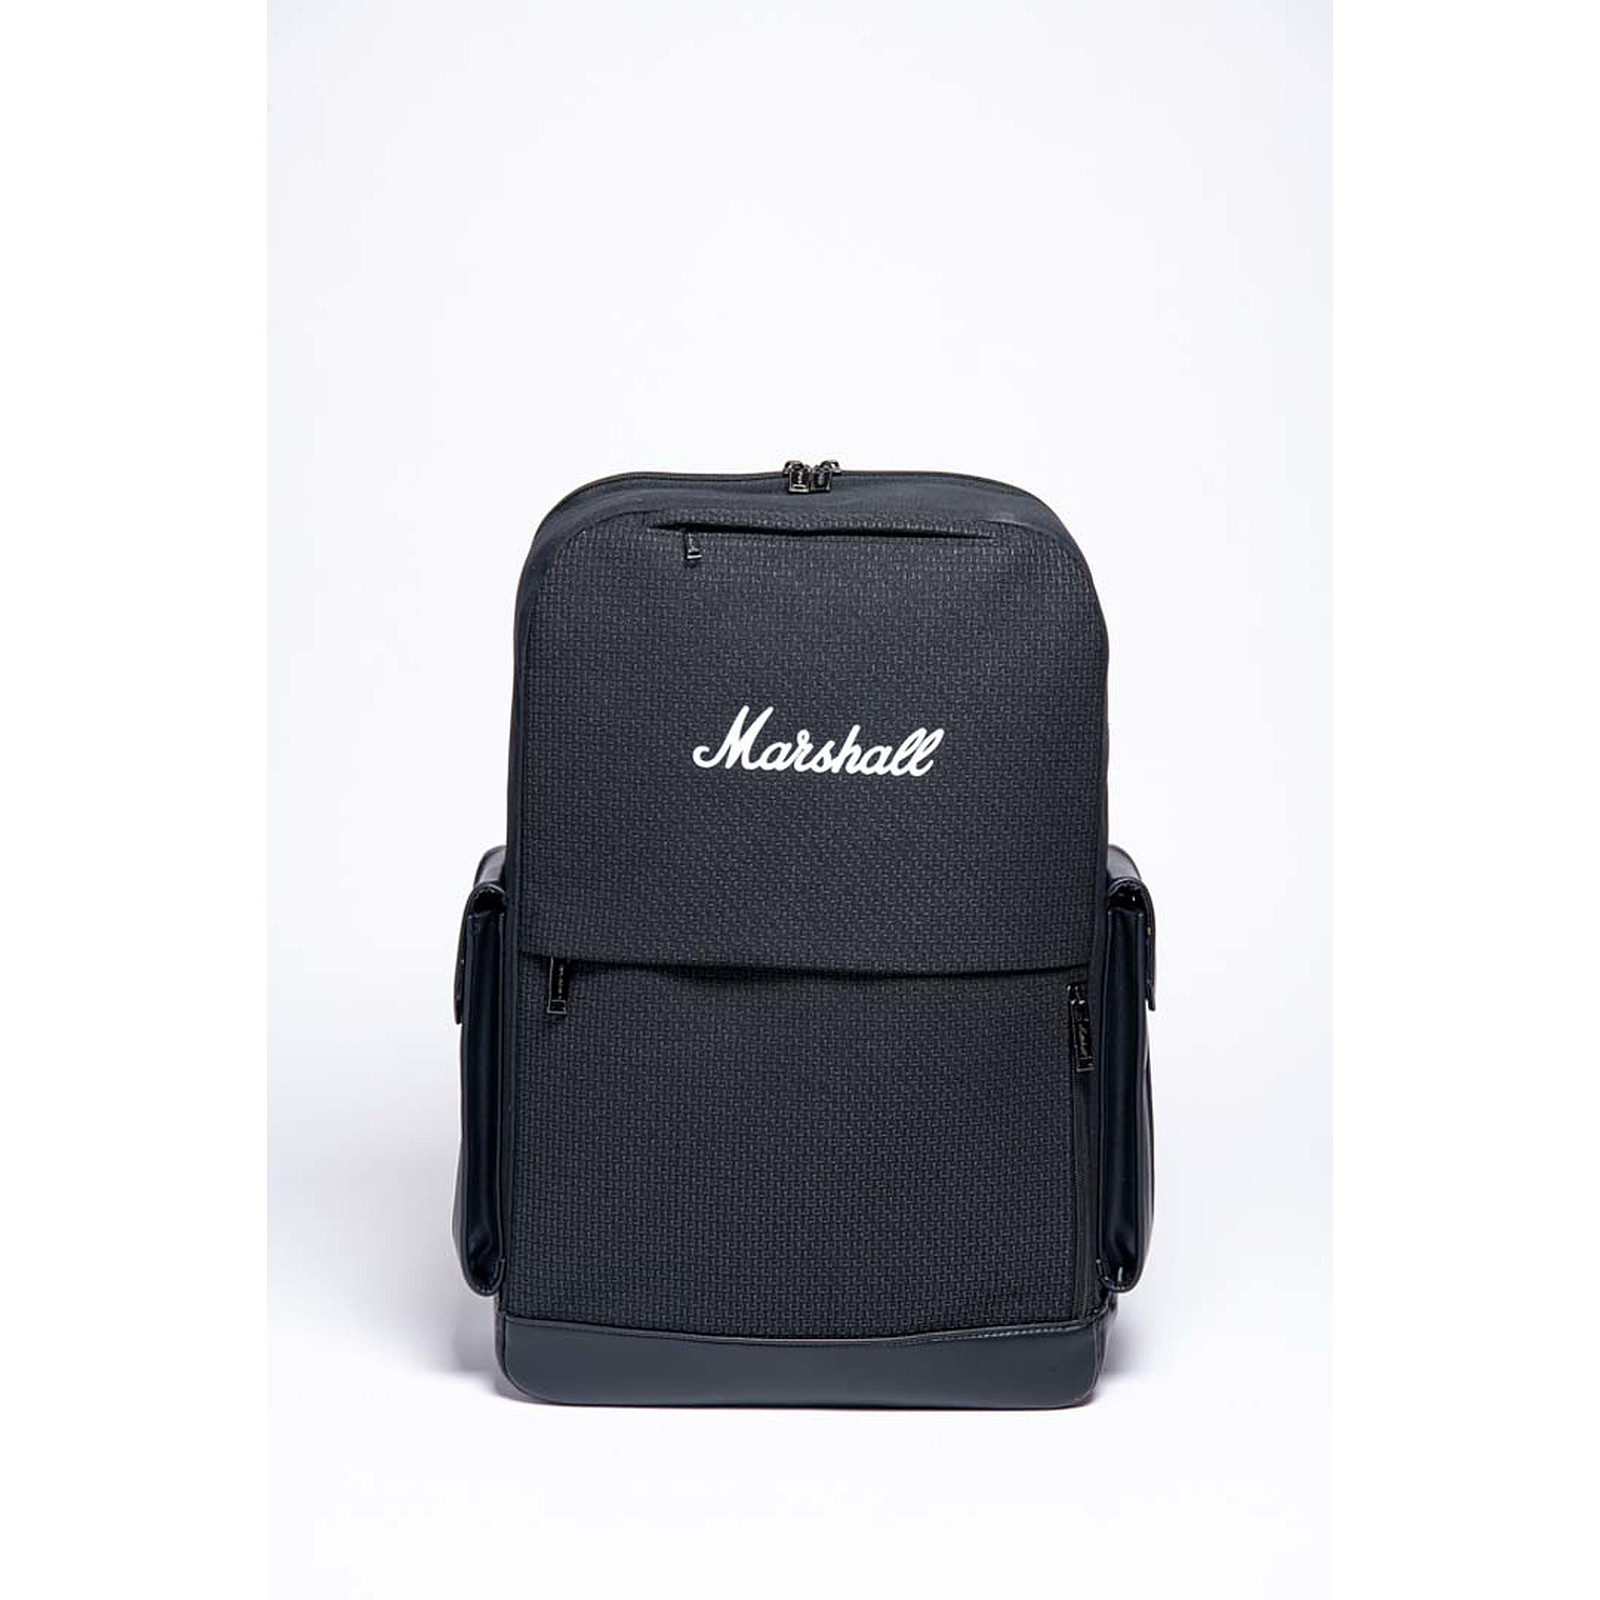 Marshall - Sac a  dos avec compartiment pc - contenance 24L - noir et logo blanc - Sac, sacoche, housse MARSHALL